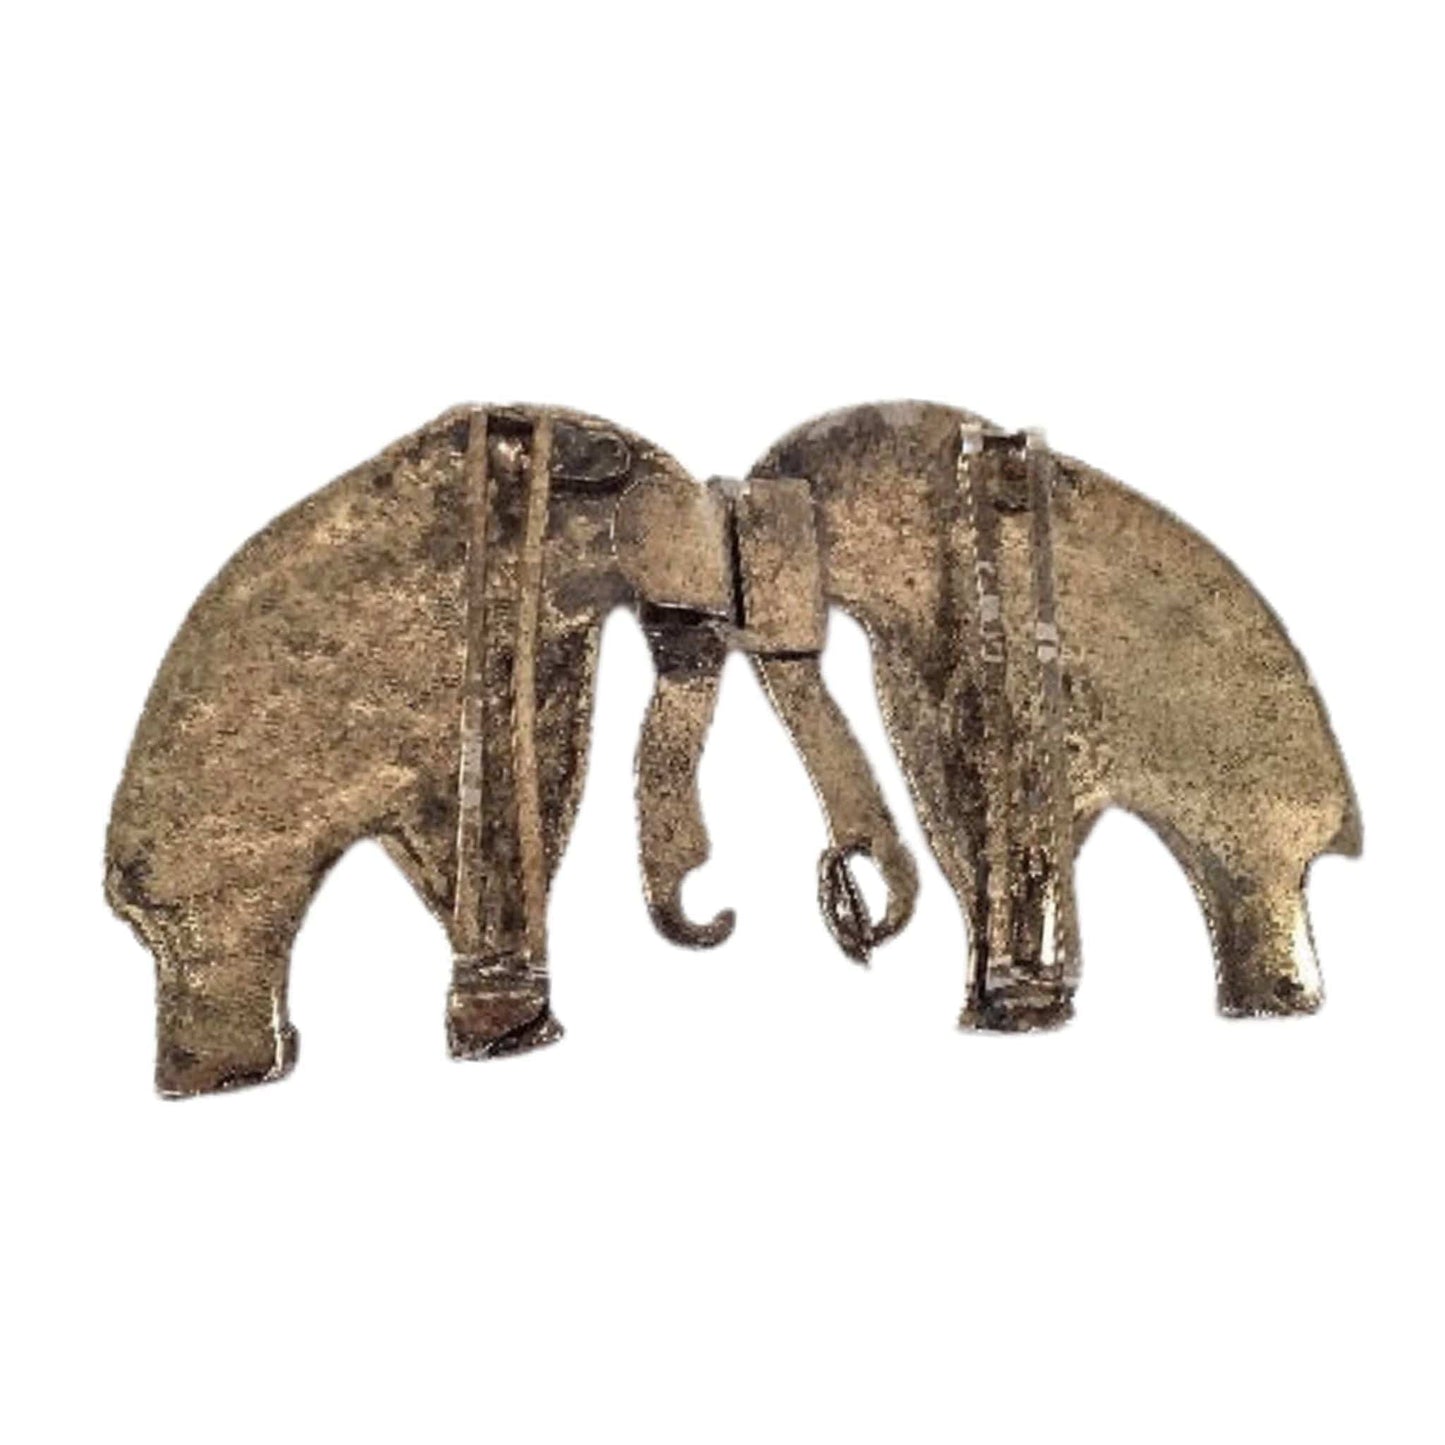 1970s Elephants Belt Buckle Large / Metal / Vintage 1970s